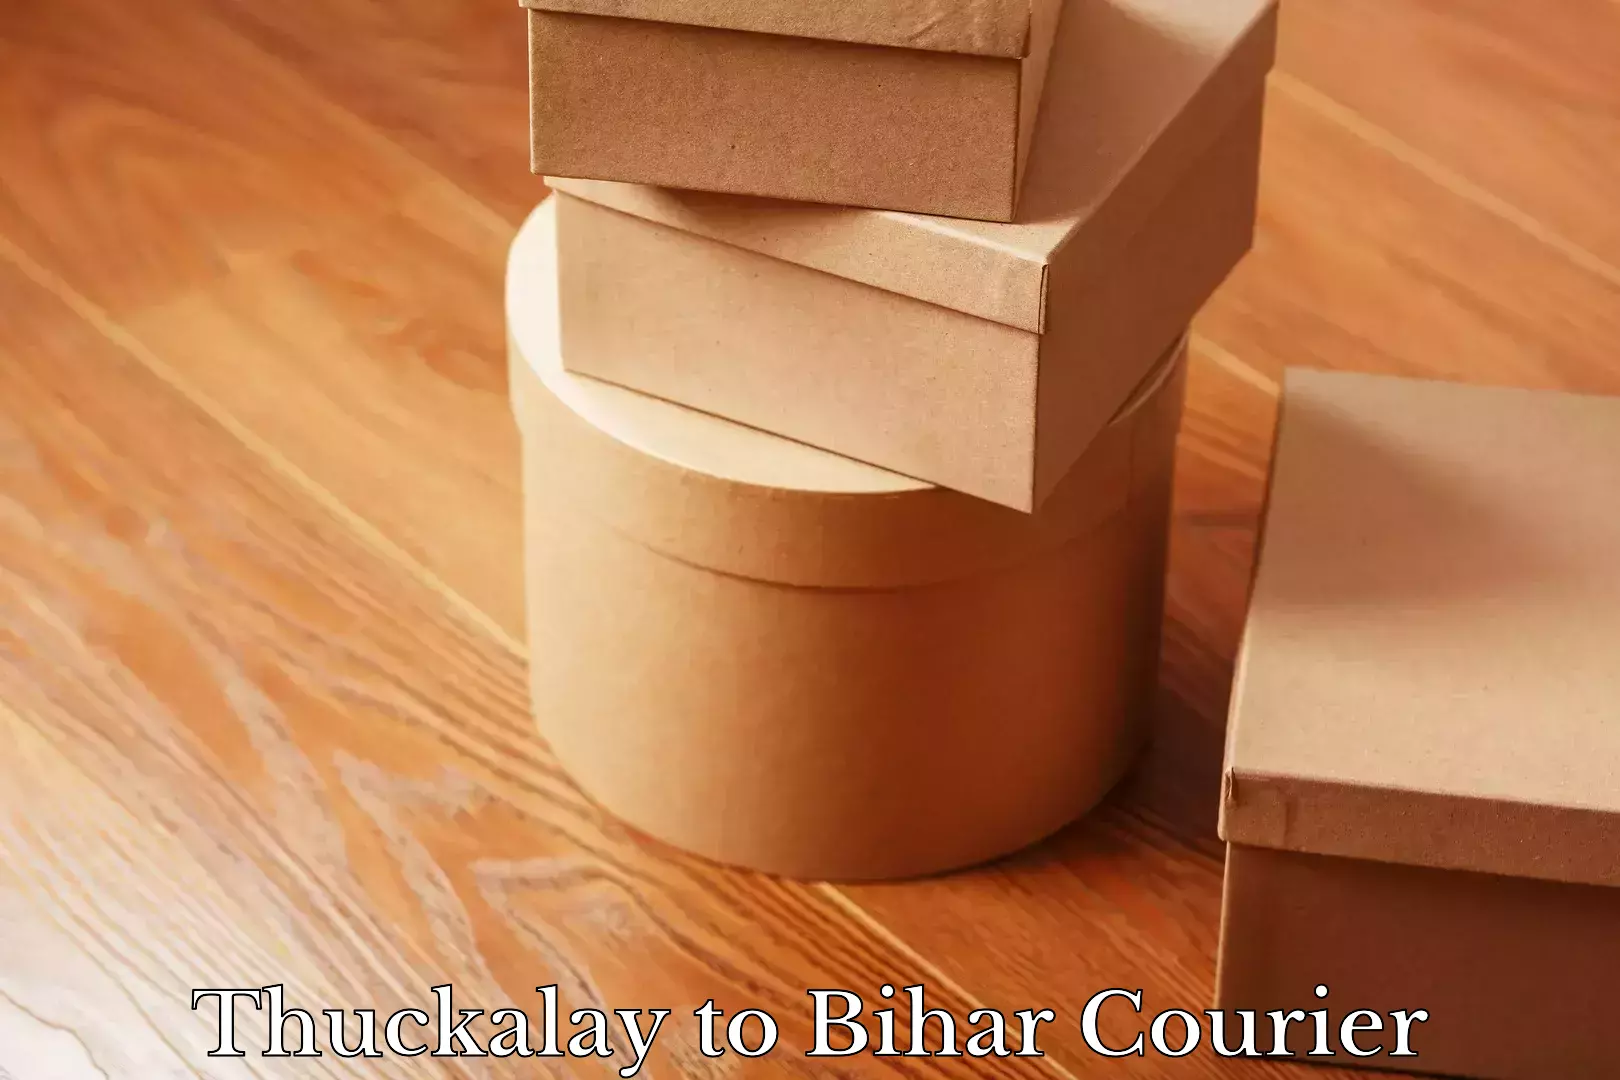 Courier service partnerships in Thuckalay to Bihar